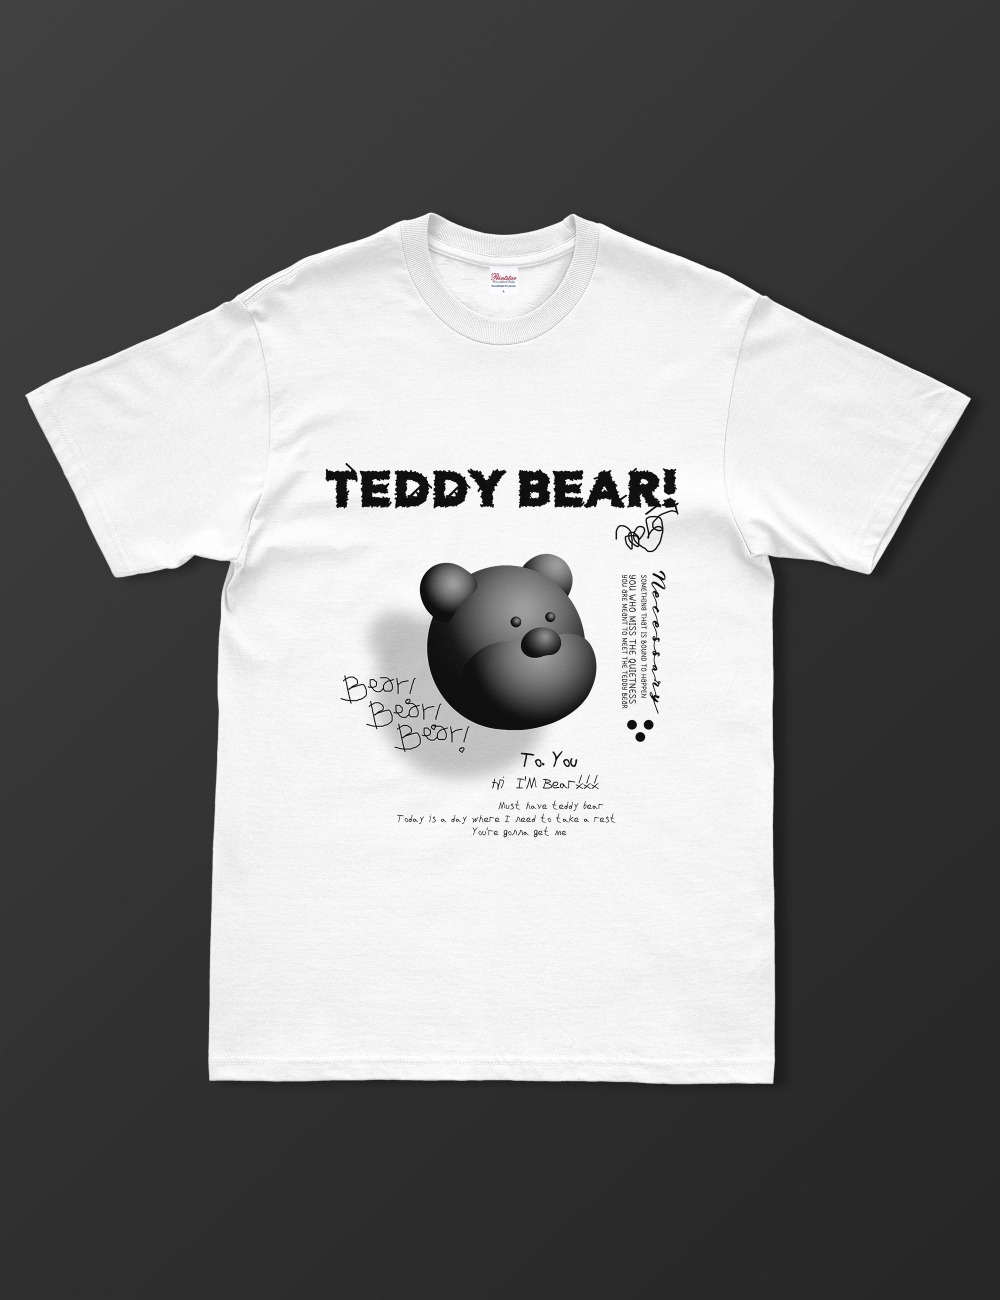 TEDDY BEAR! half t-shirt